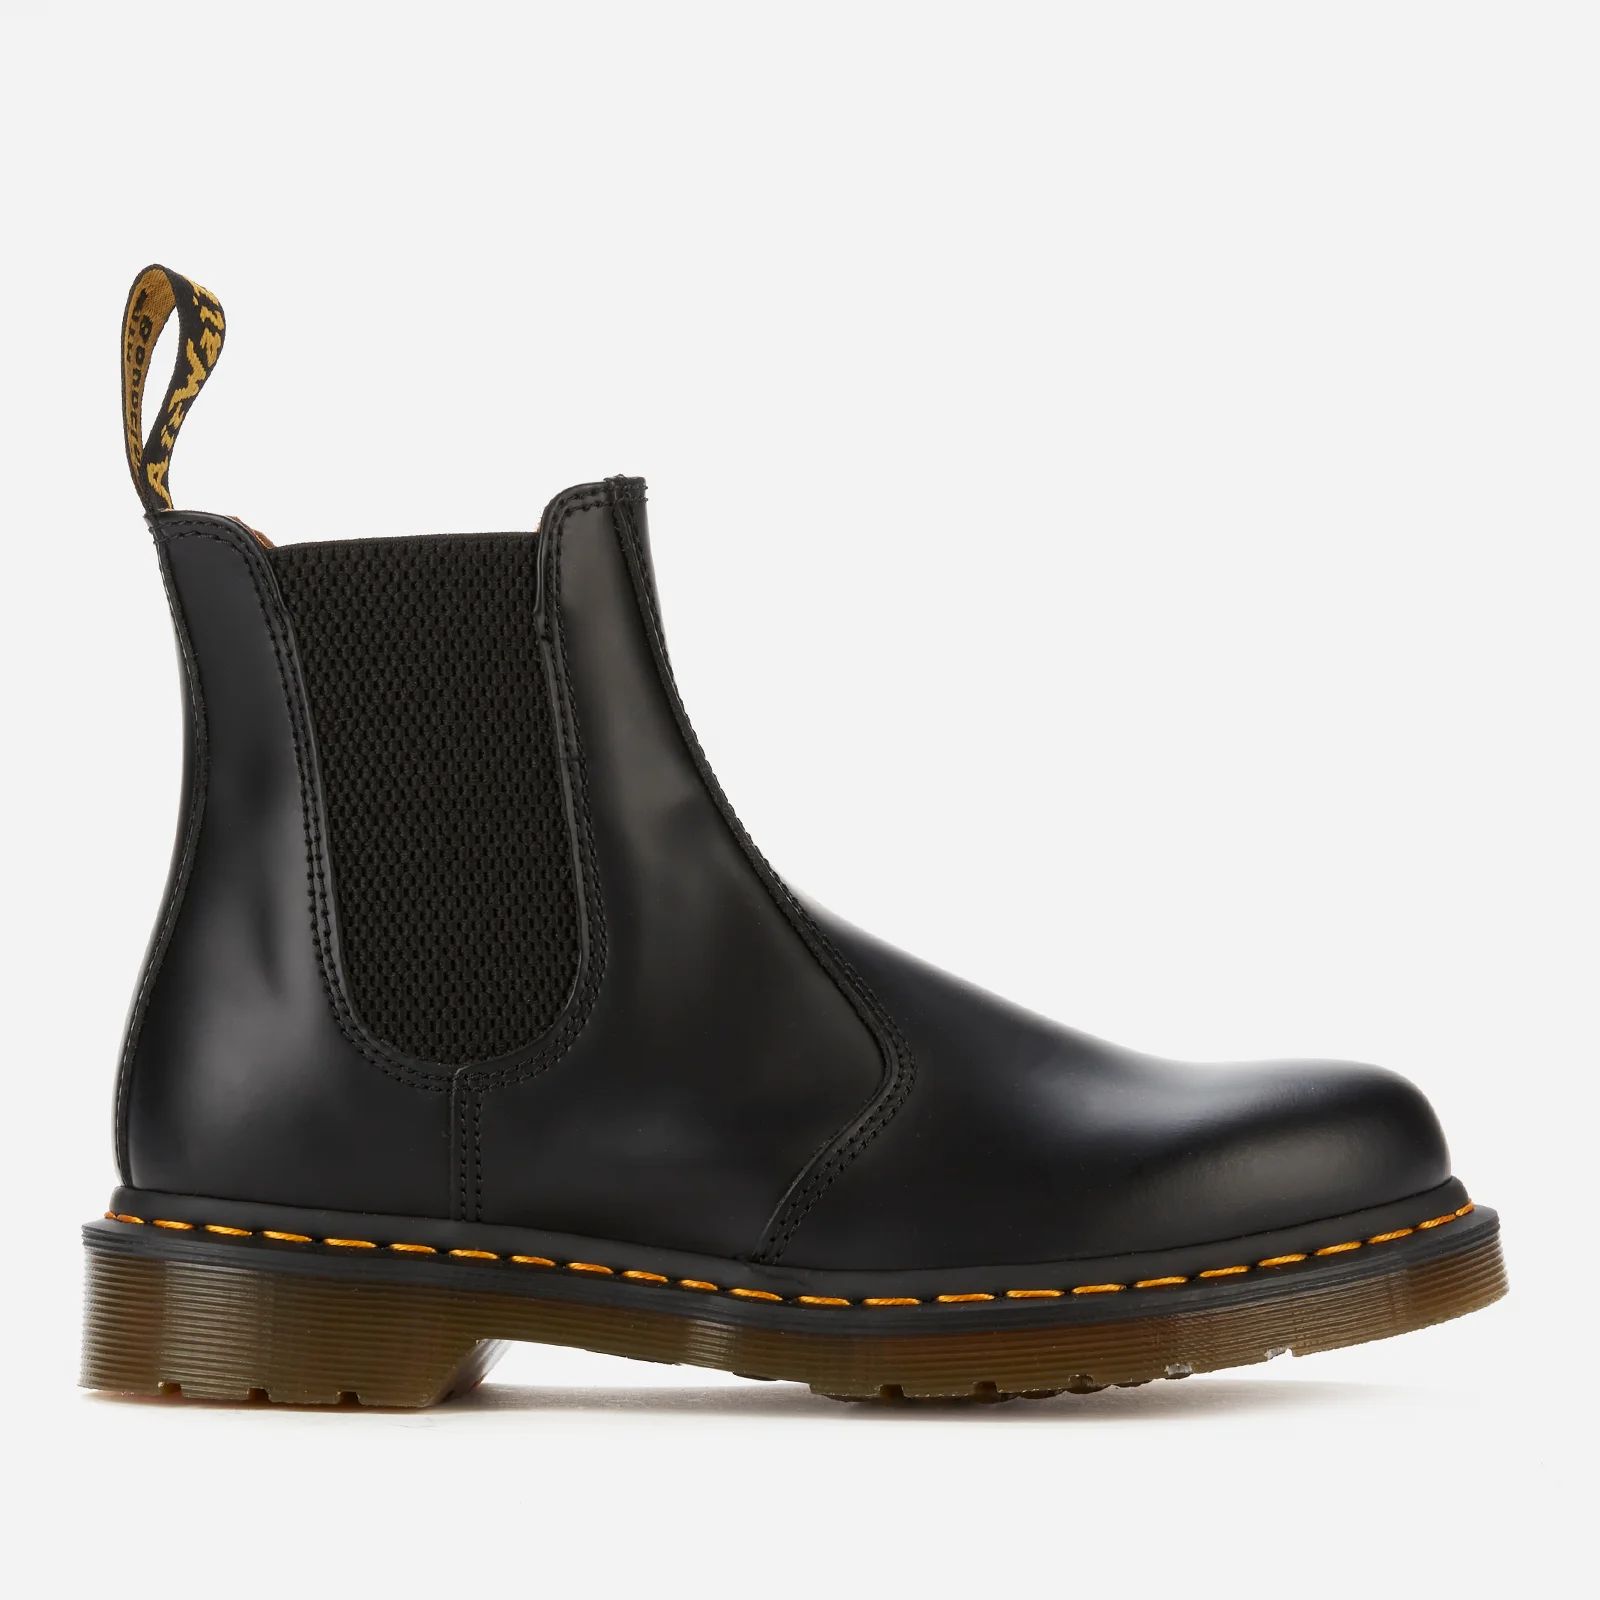 Dr. Martens 2976 Smooth Leather Chelsea Boots - Black - UK 3 Image 1